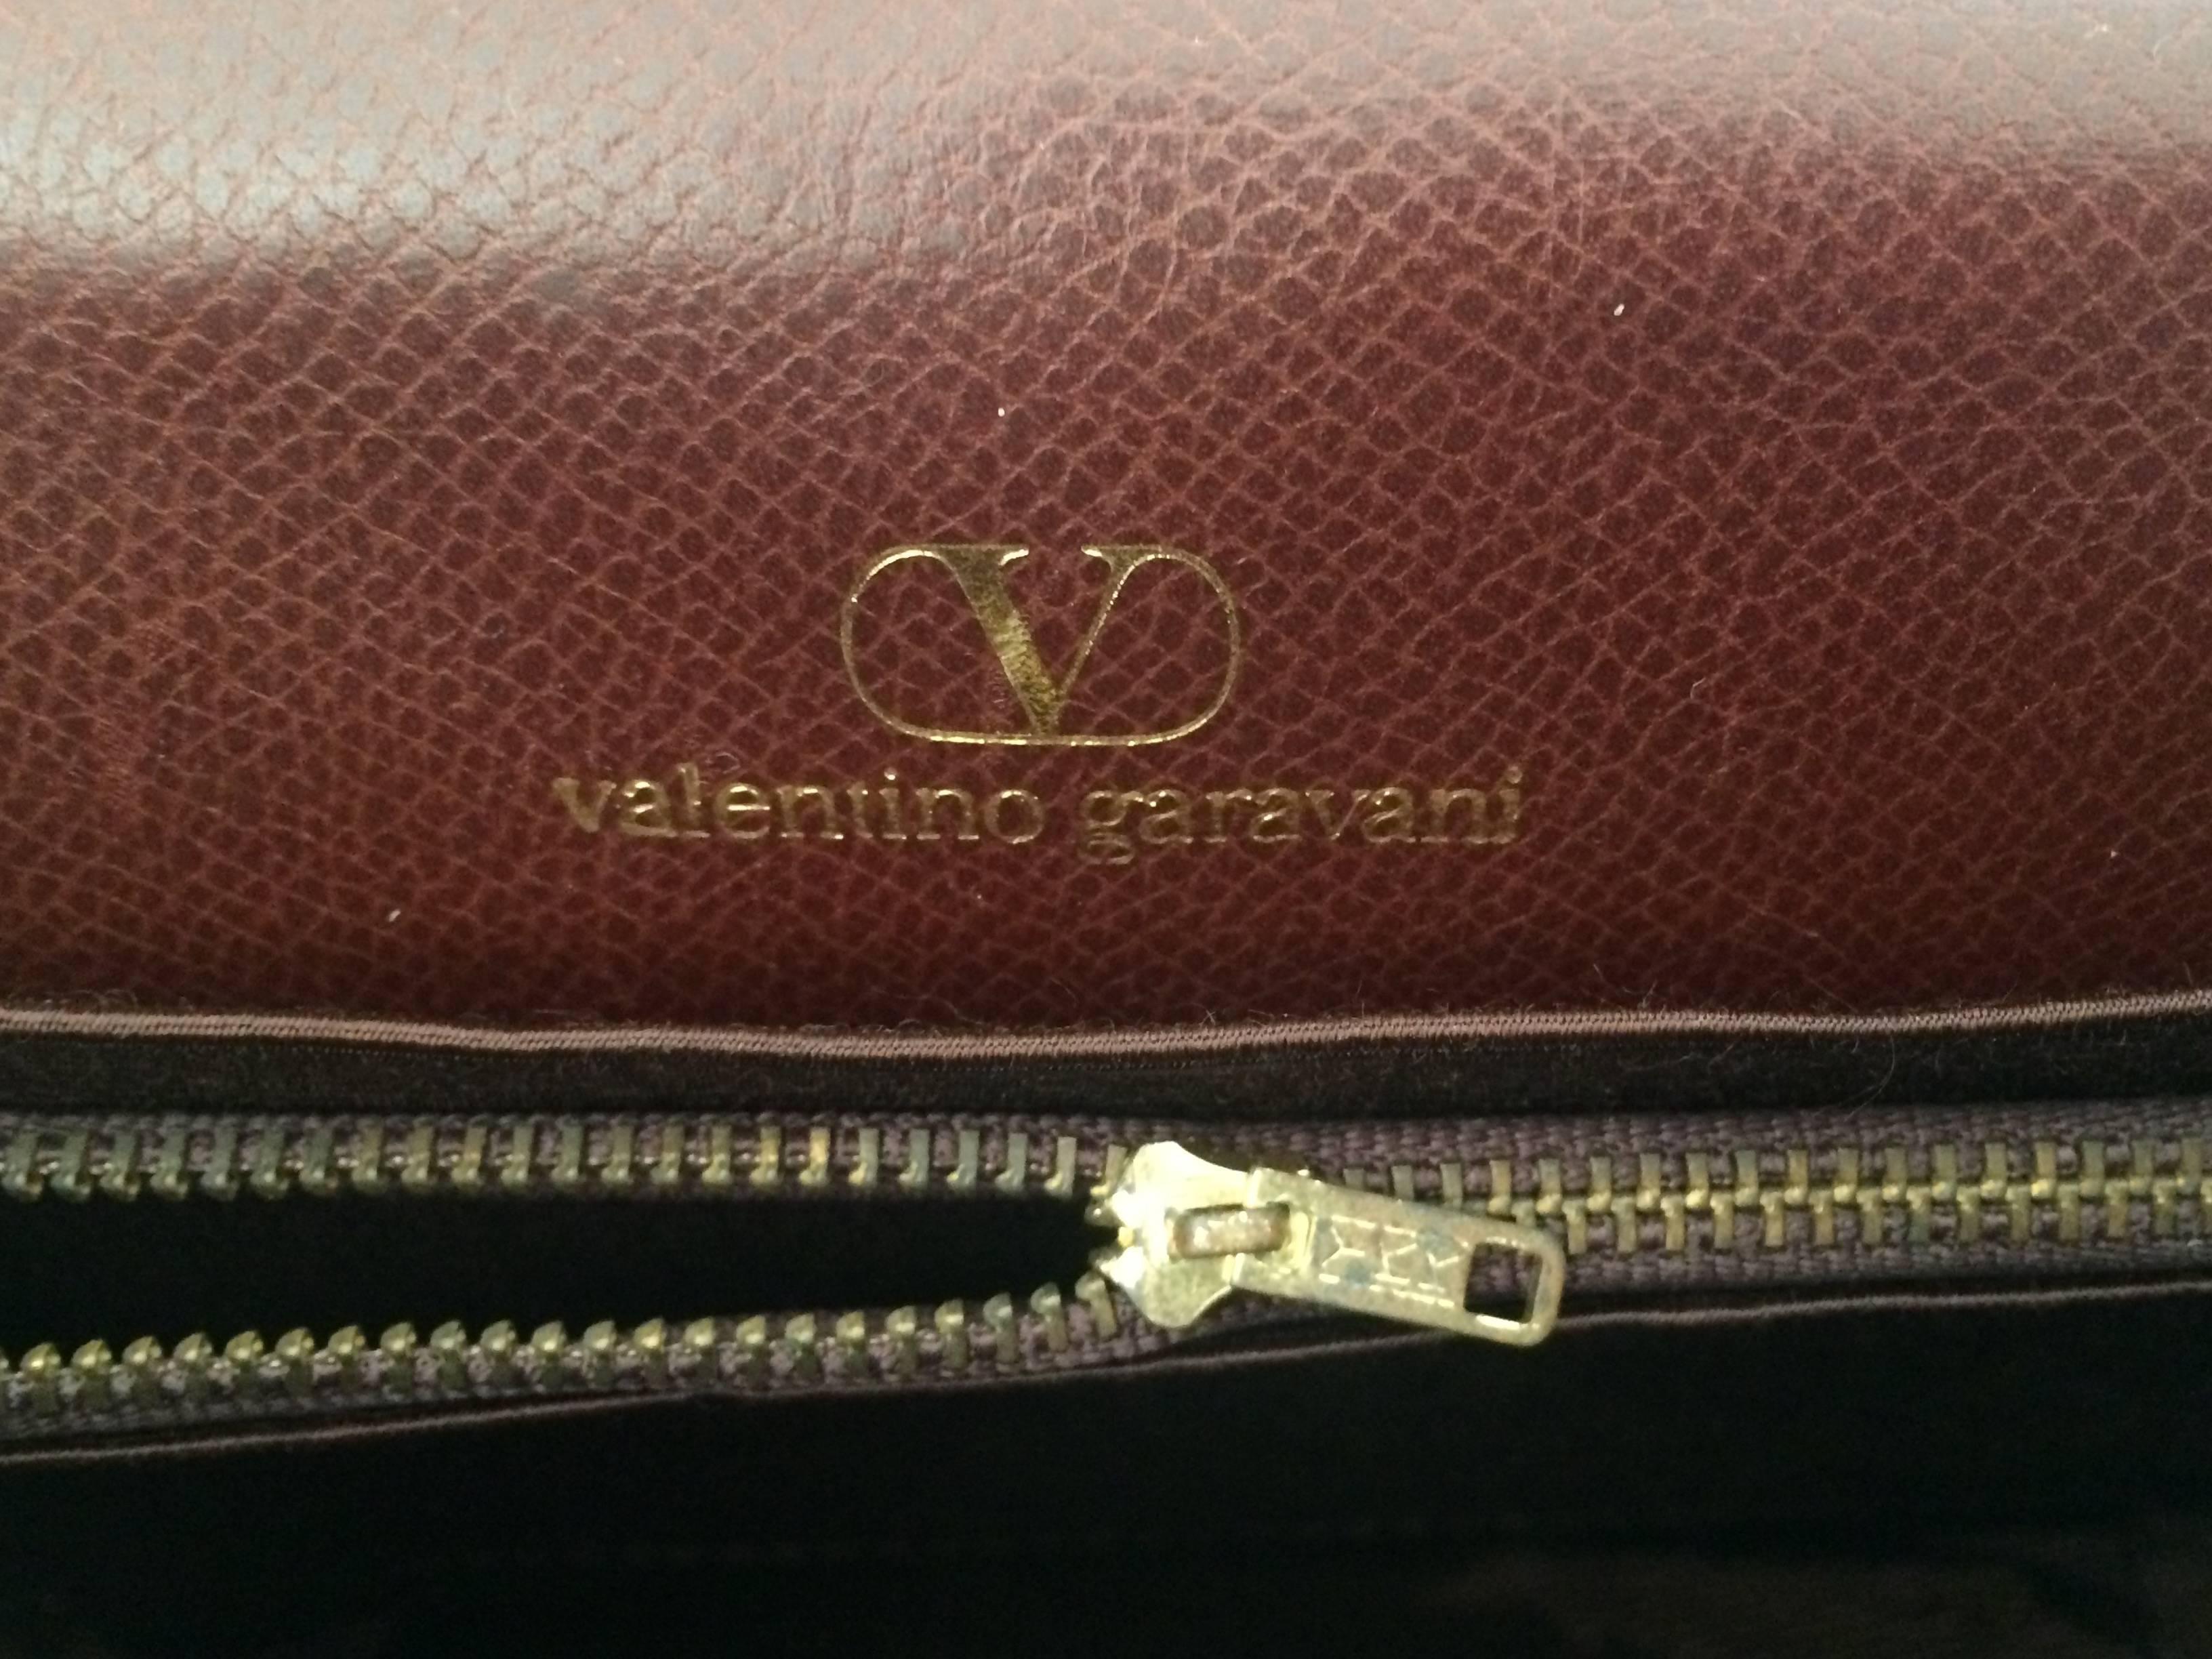 Vintage Valentino Garavani dark brown leather shoulder bag with tassel charm. 1